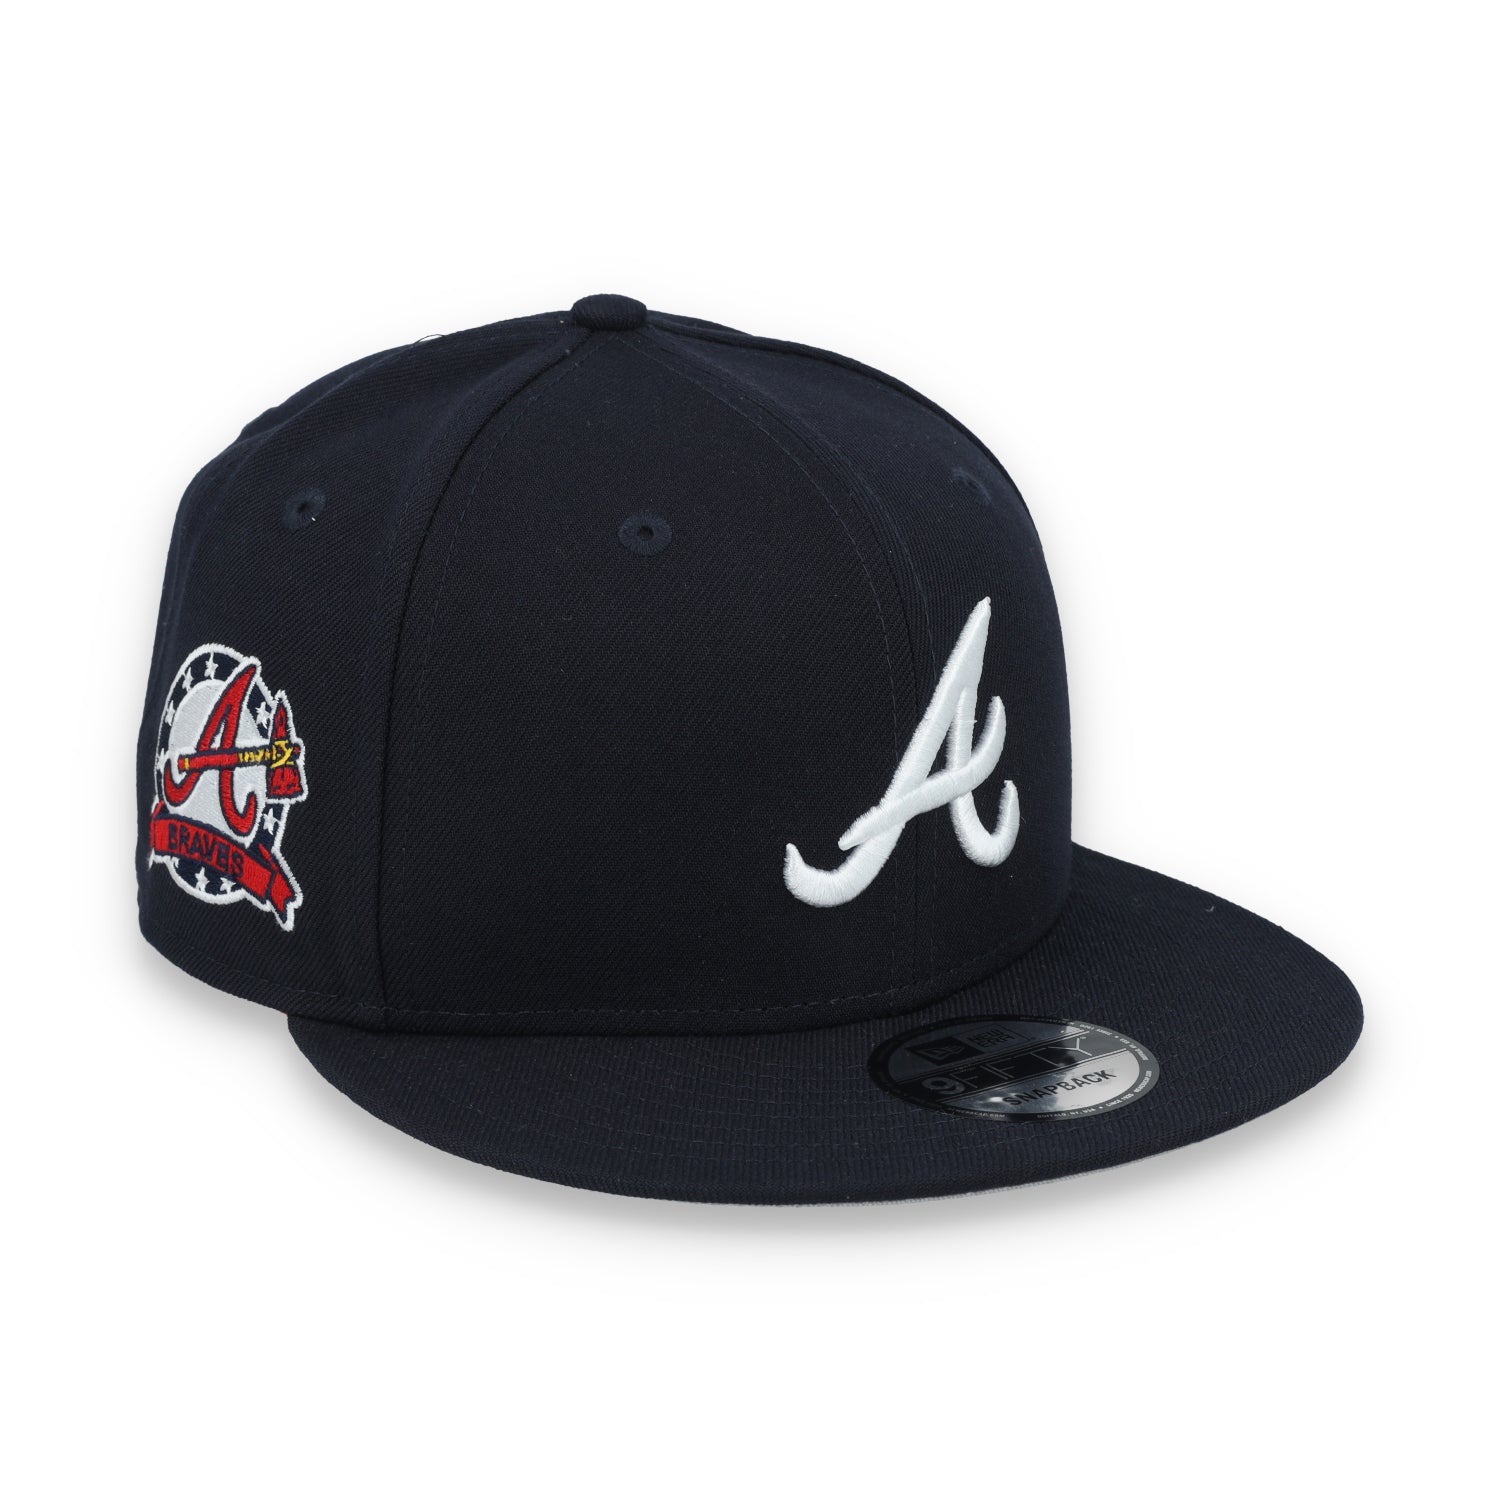 New Era Atlanta Braves Patch E3 9FIFTY Snapback Hat